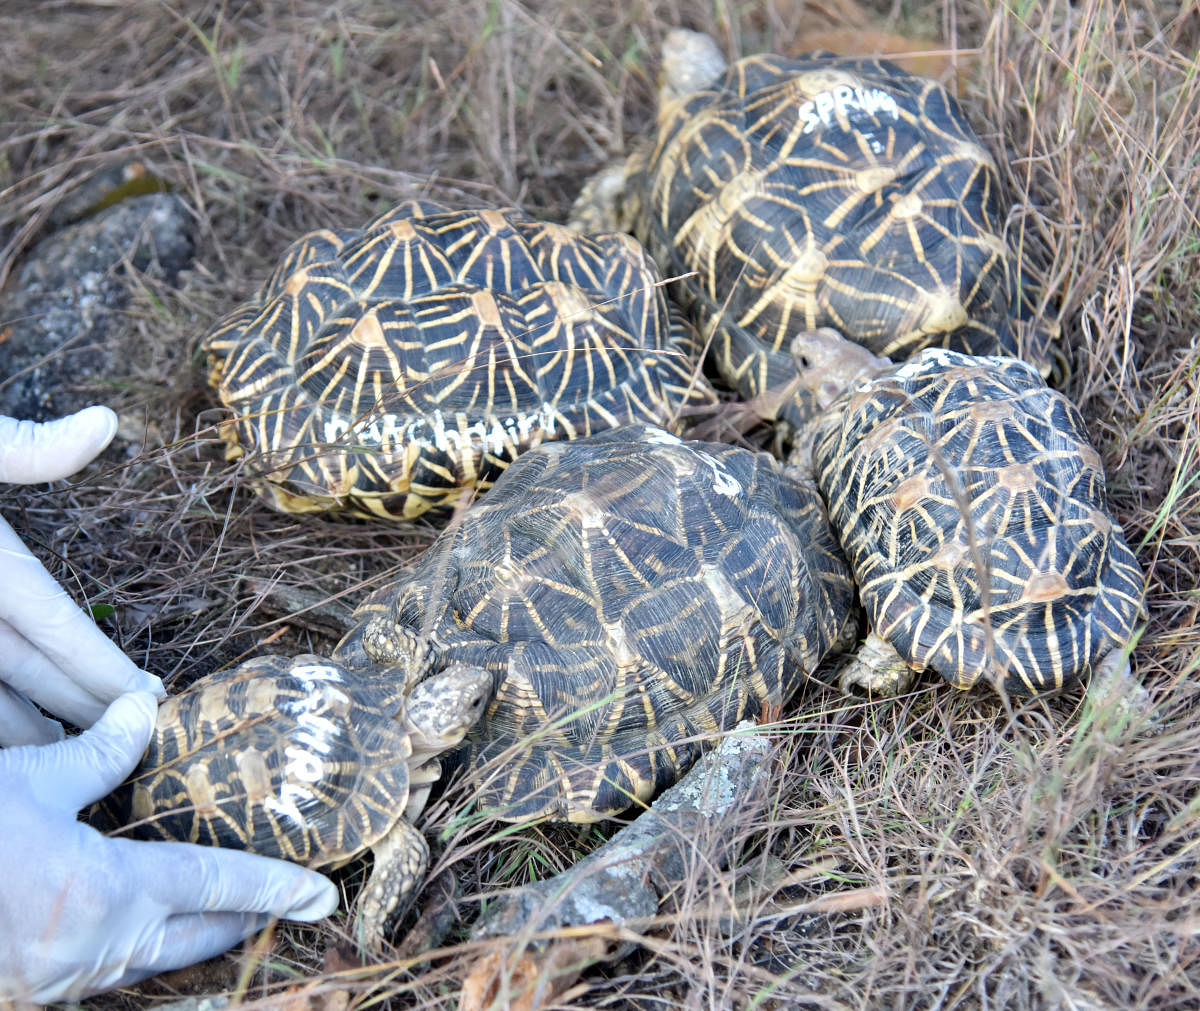 Saved star tortoises in Bannerghatta quarantine centre